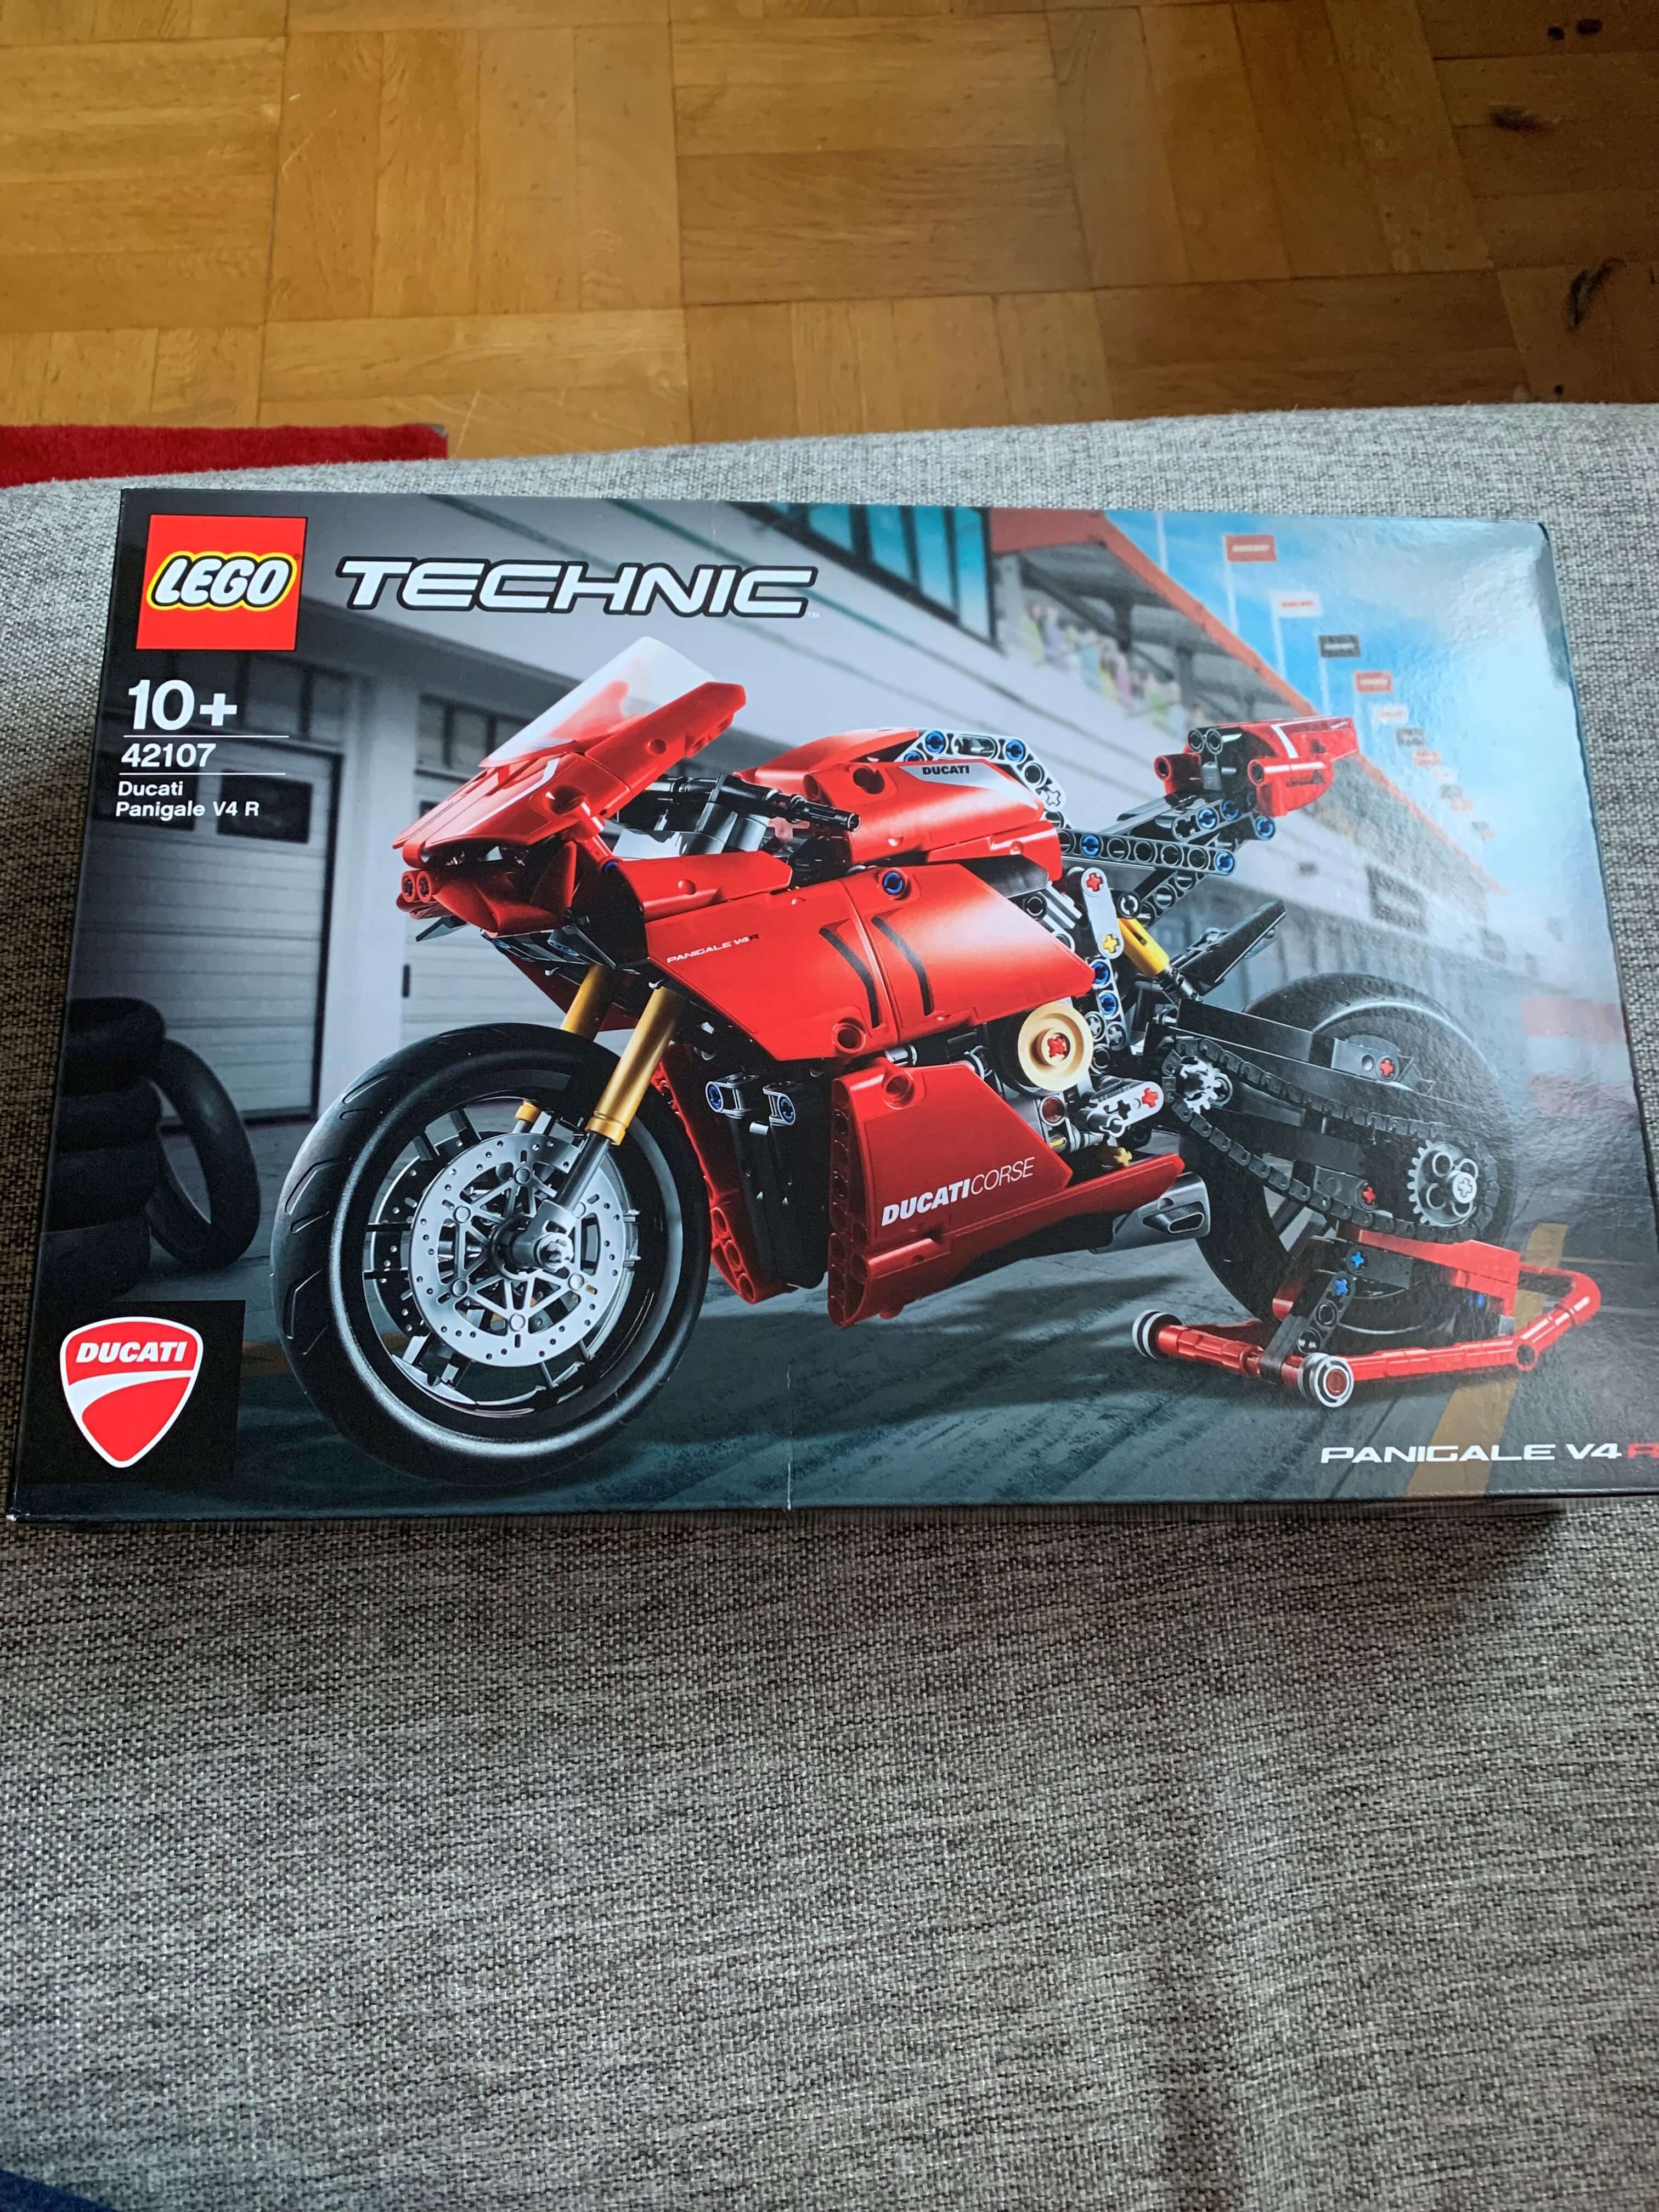 Ducati_lego.jpg